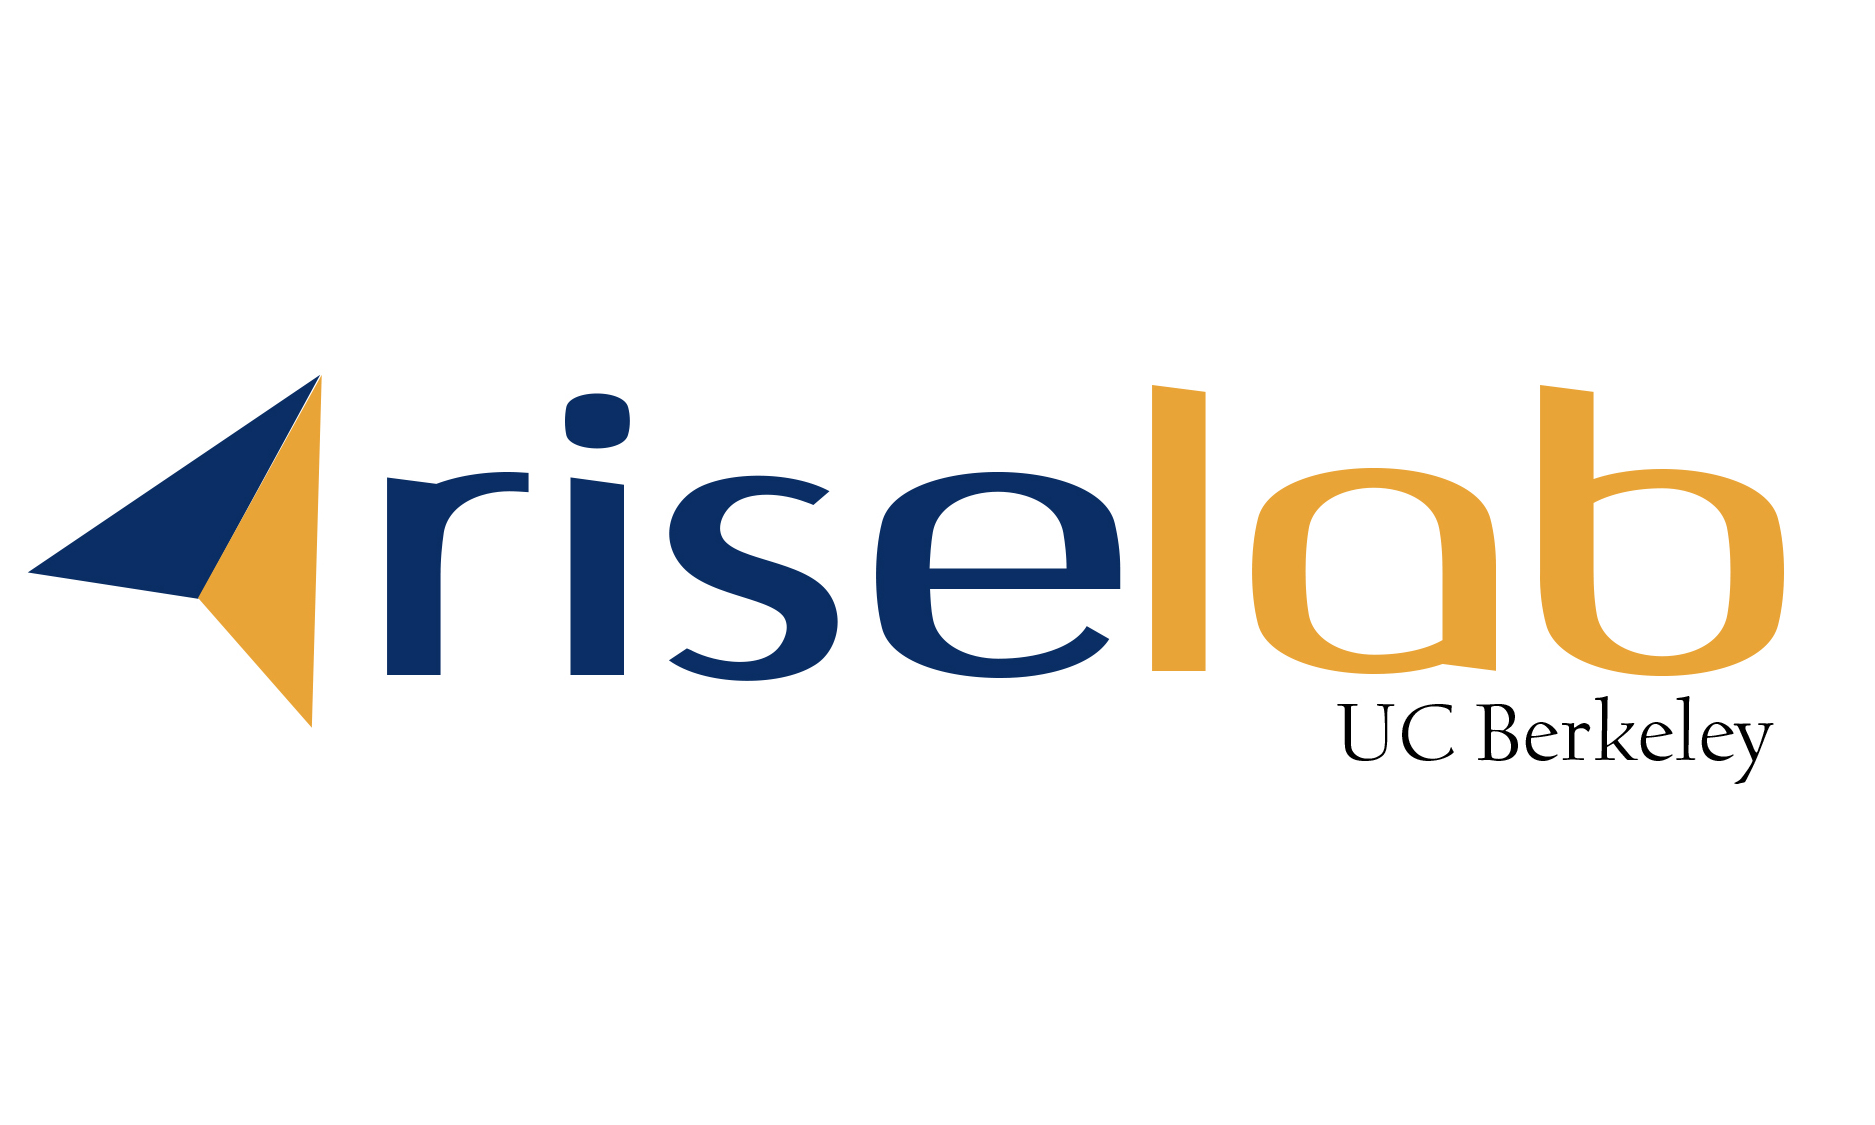 rise lab logo